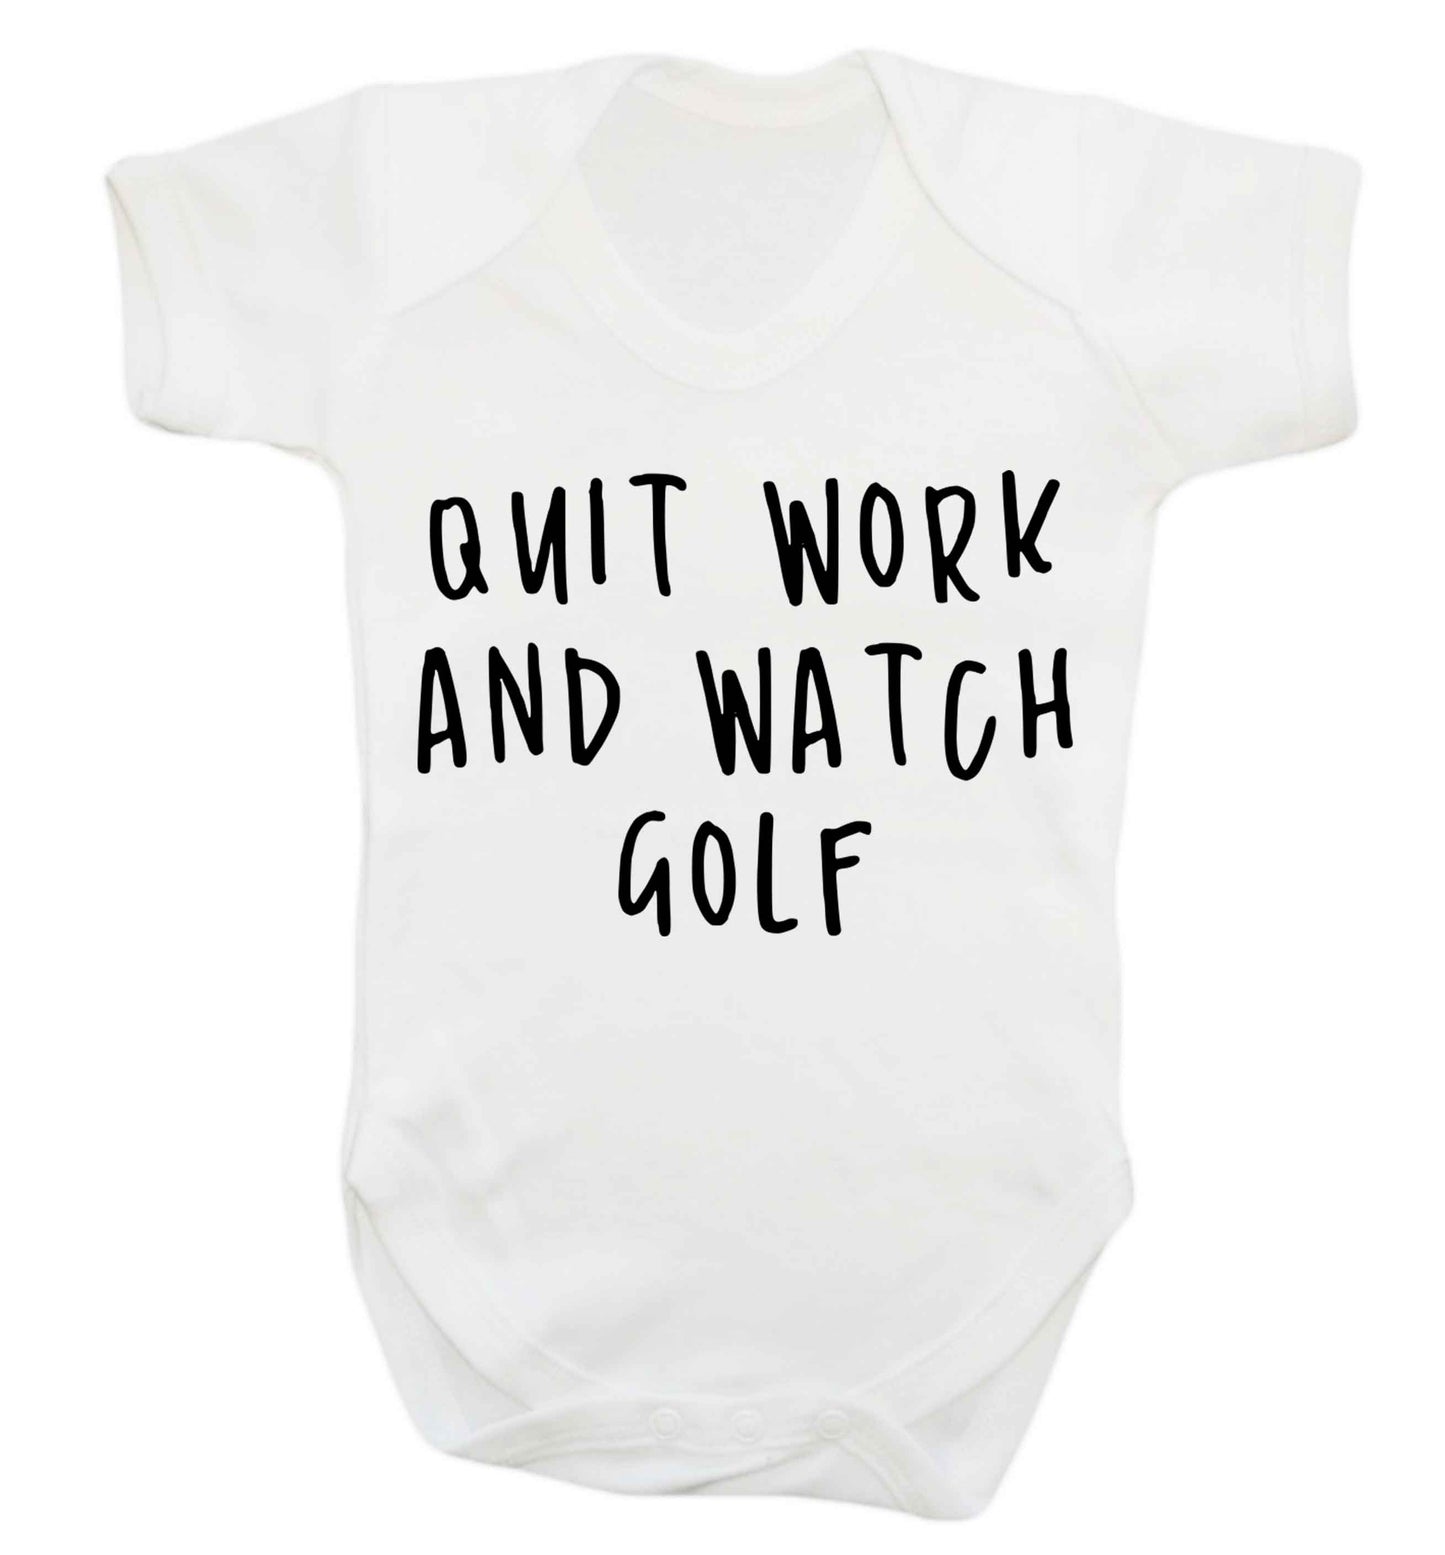 Quit work and watch golf Baby Vest white 18-24 months